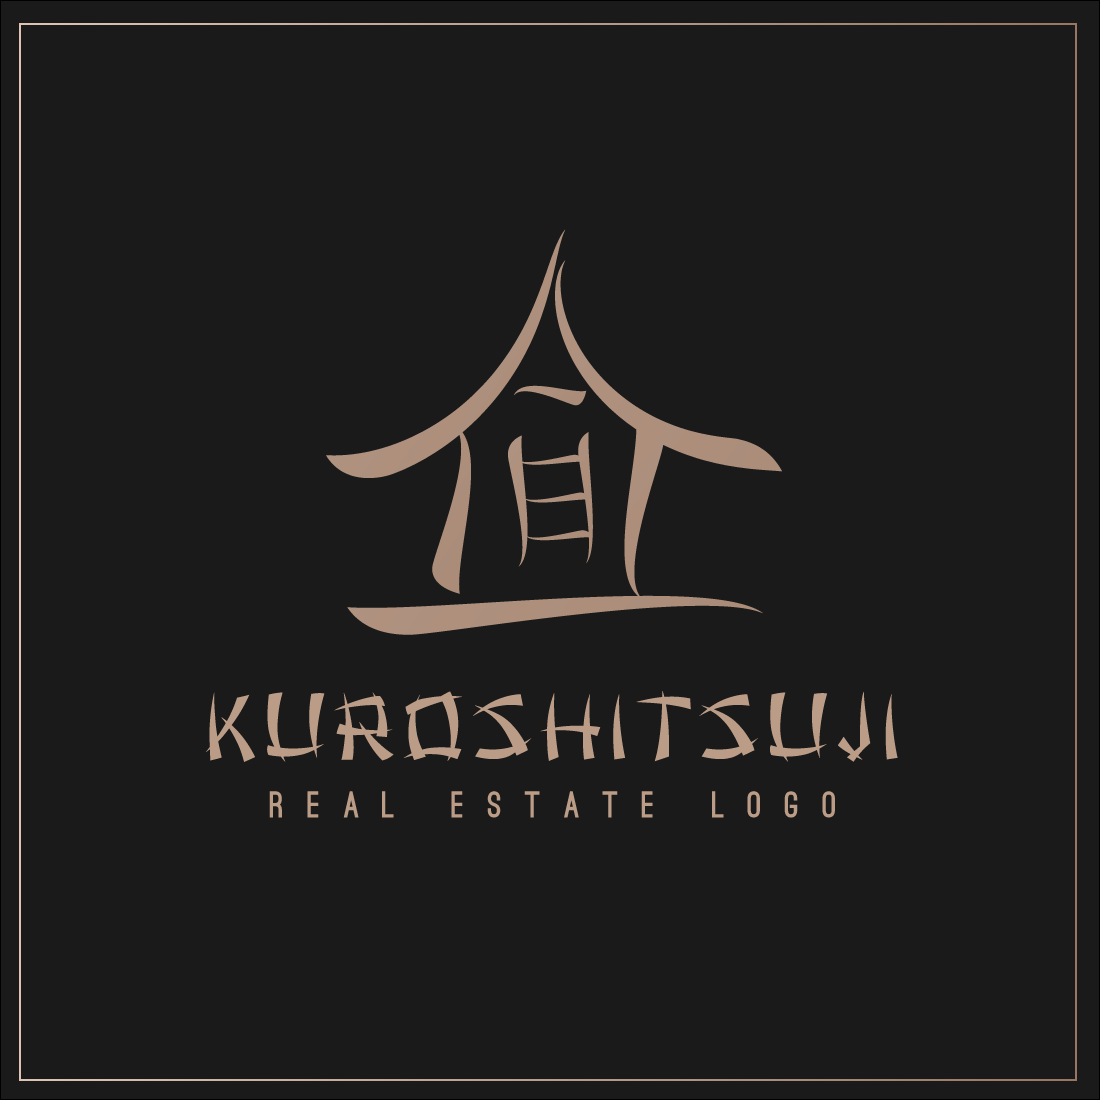 Kuroshitsuji Real Estate Asian Inspired Logo [Sphinx Creatus] cover image.